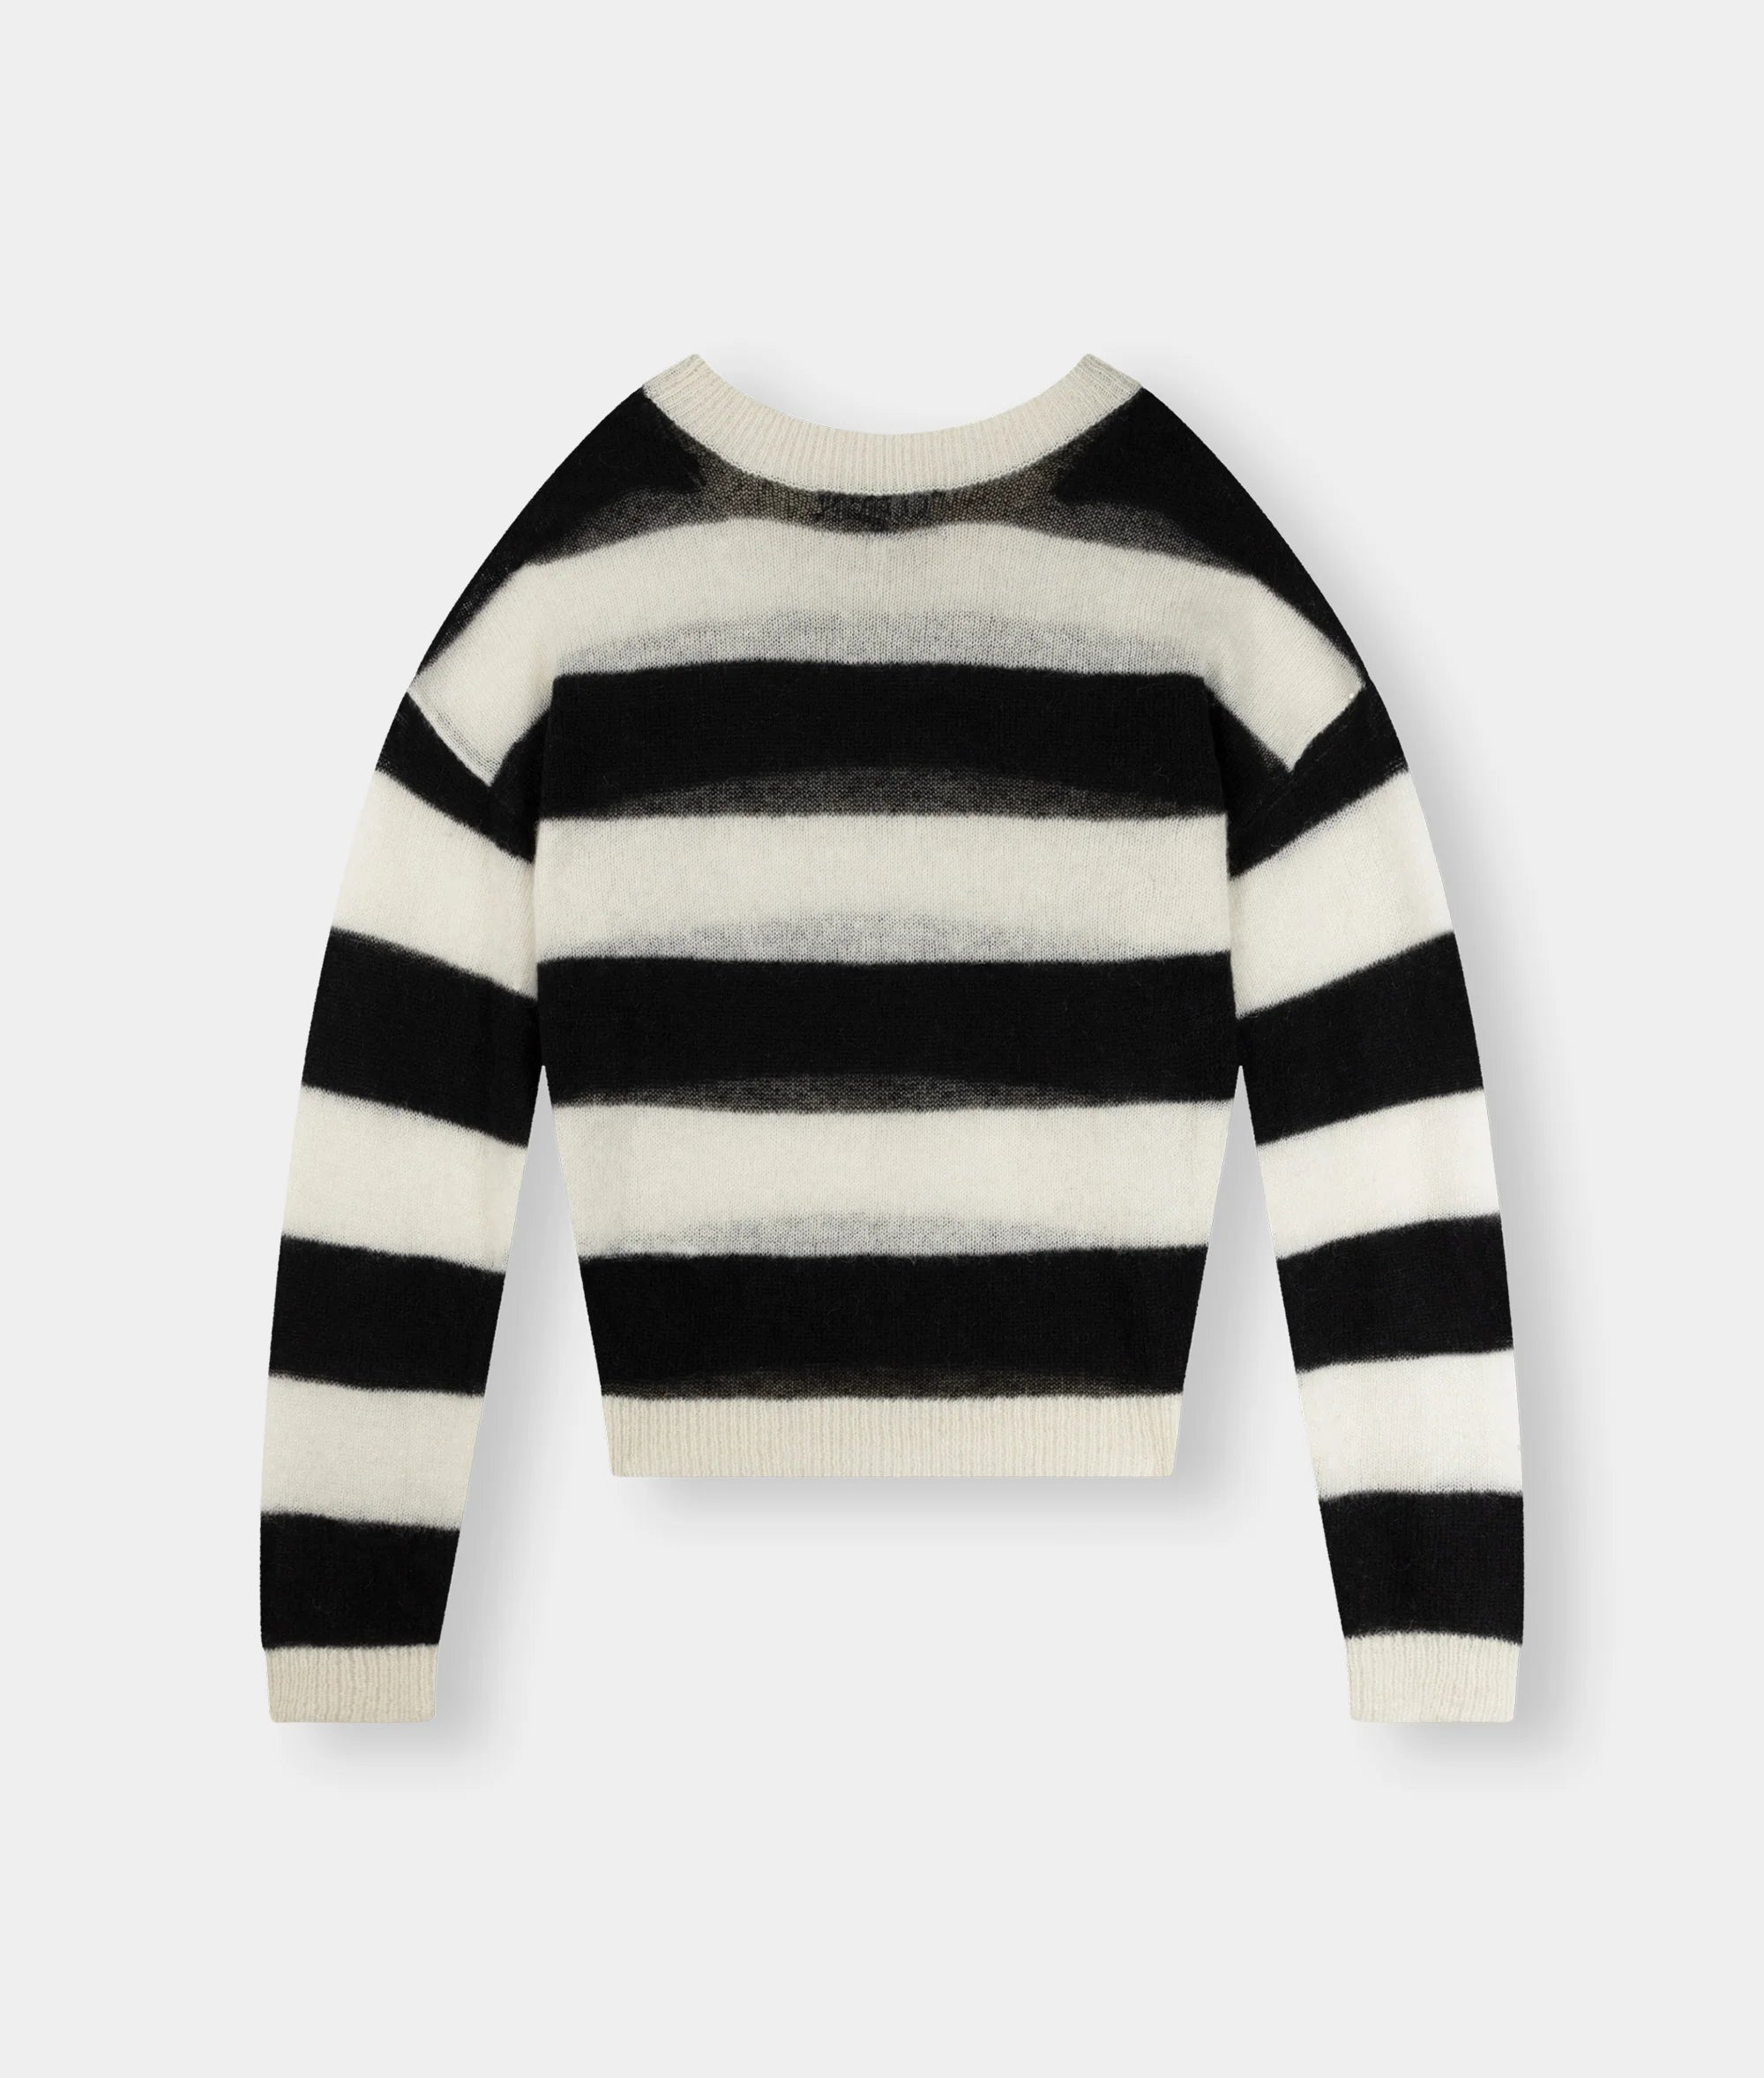 10 DAYS Pullover Thin Knit Sweater Block Stripe